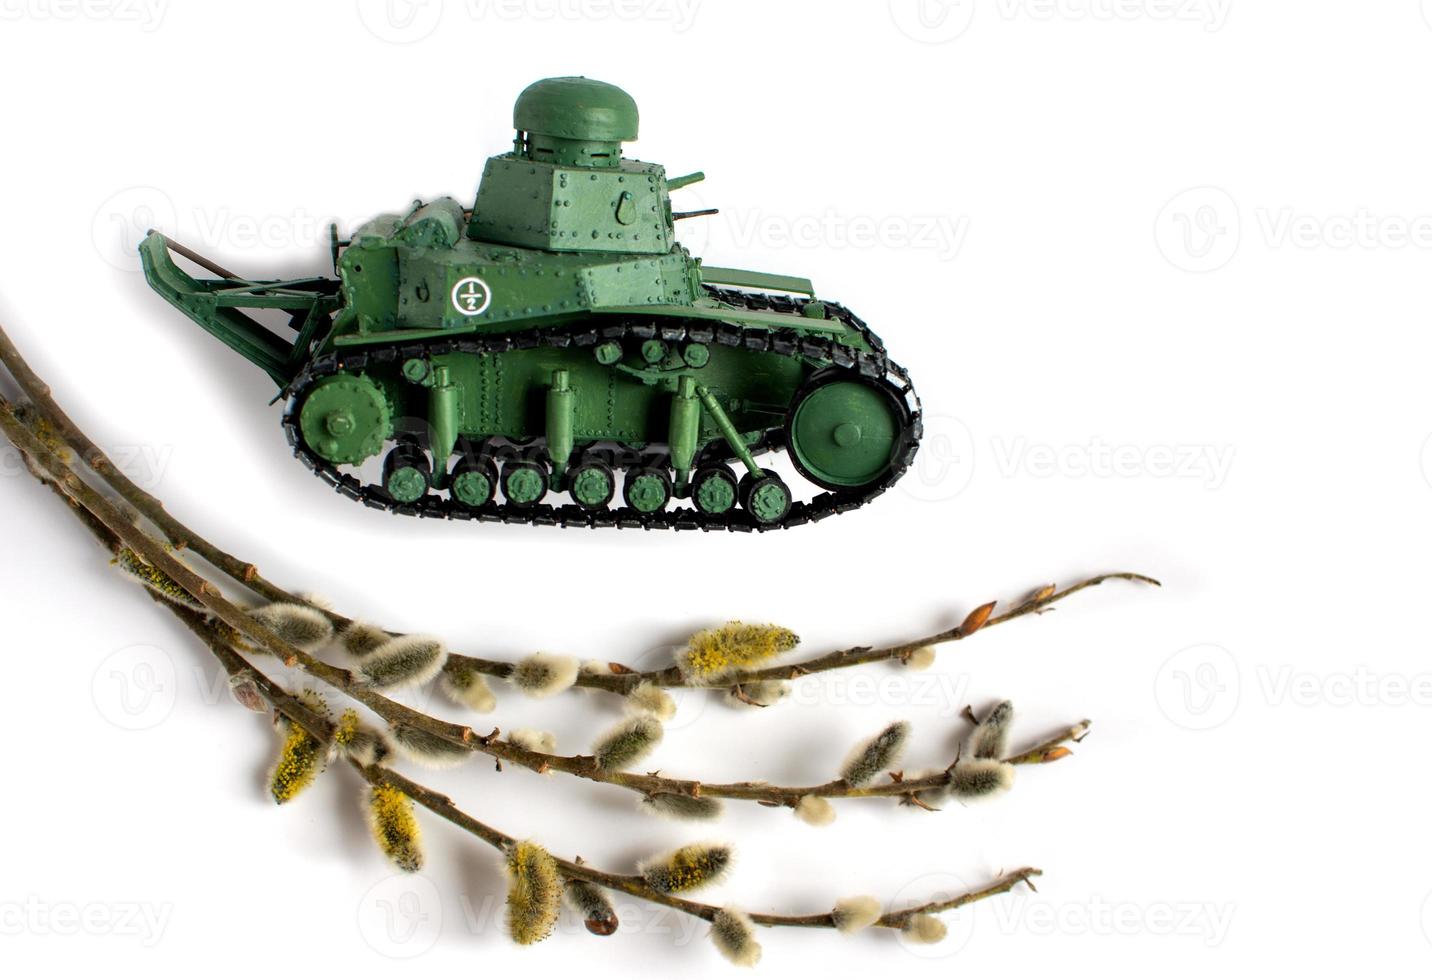 modelo de un viejo tanque soviético hecho de papel sobre un fondo blanco. rama de sauce en primer plano. vista lateral. foto